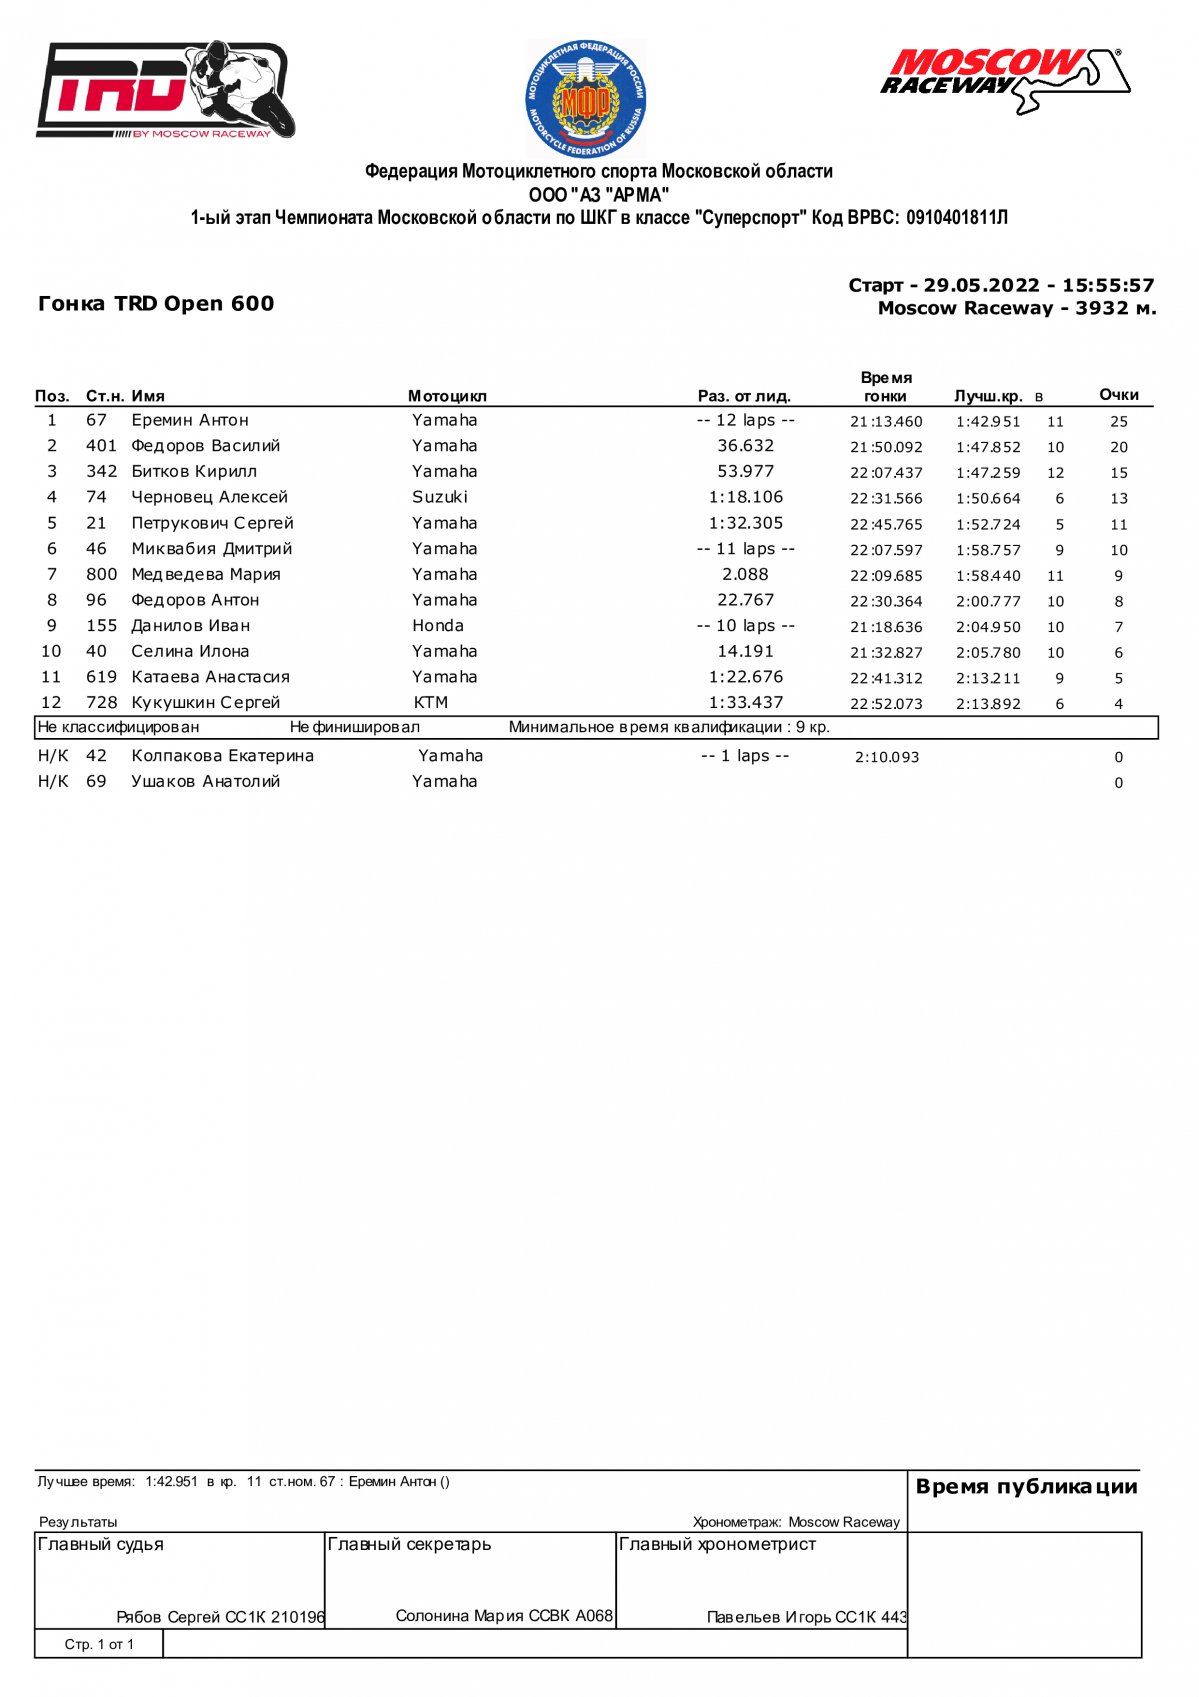 Результаты 1 этапа TRD Open 600, Moscow Raceway (29/05/2022)